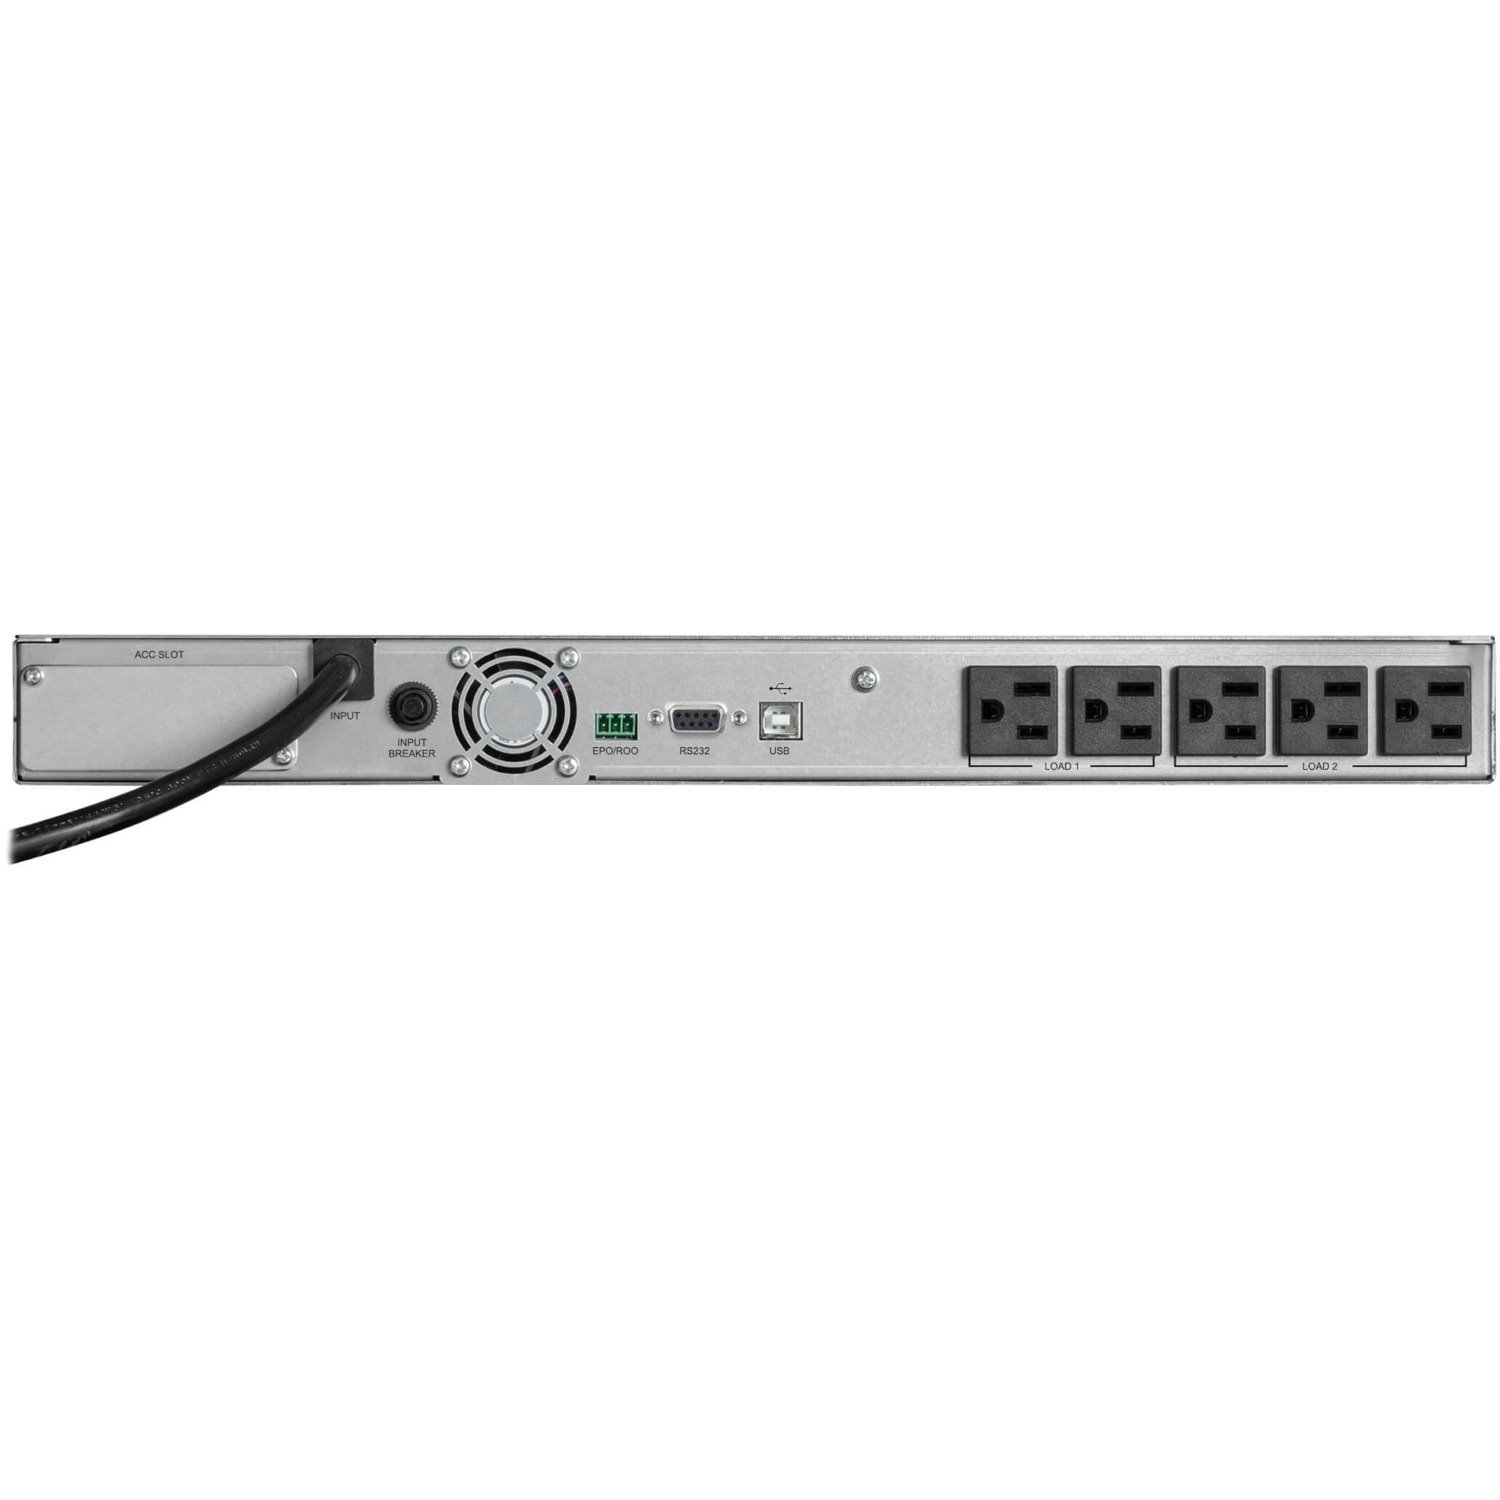 Tripp Lite by Eaton 1440VA 1100W 120V Line-Interactive UPS - 5 NEMA 5-15R Outlets, Network Card Option, USB, DB9, 1U Rack/Tower - Battery Backup